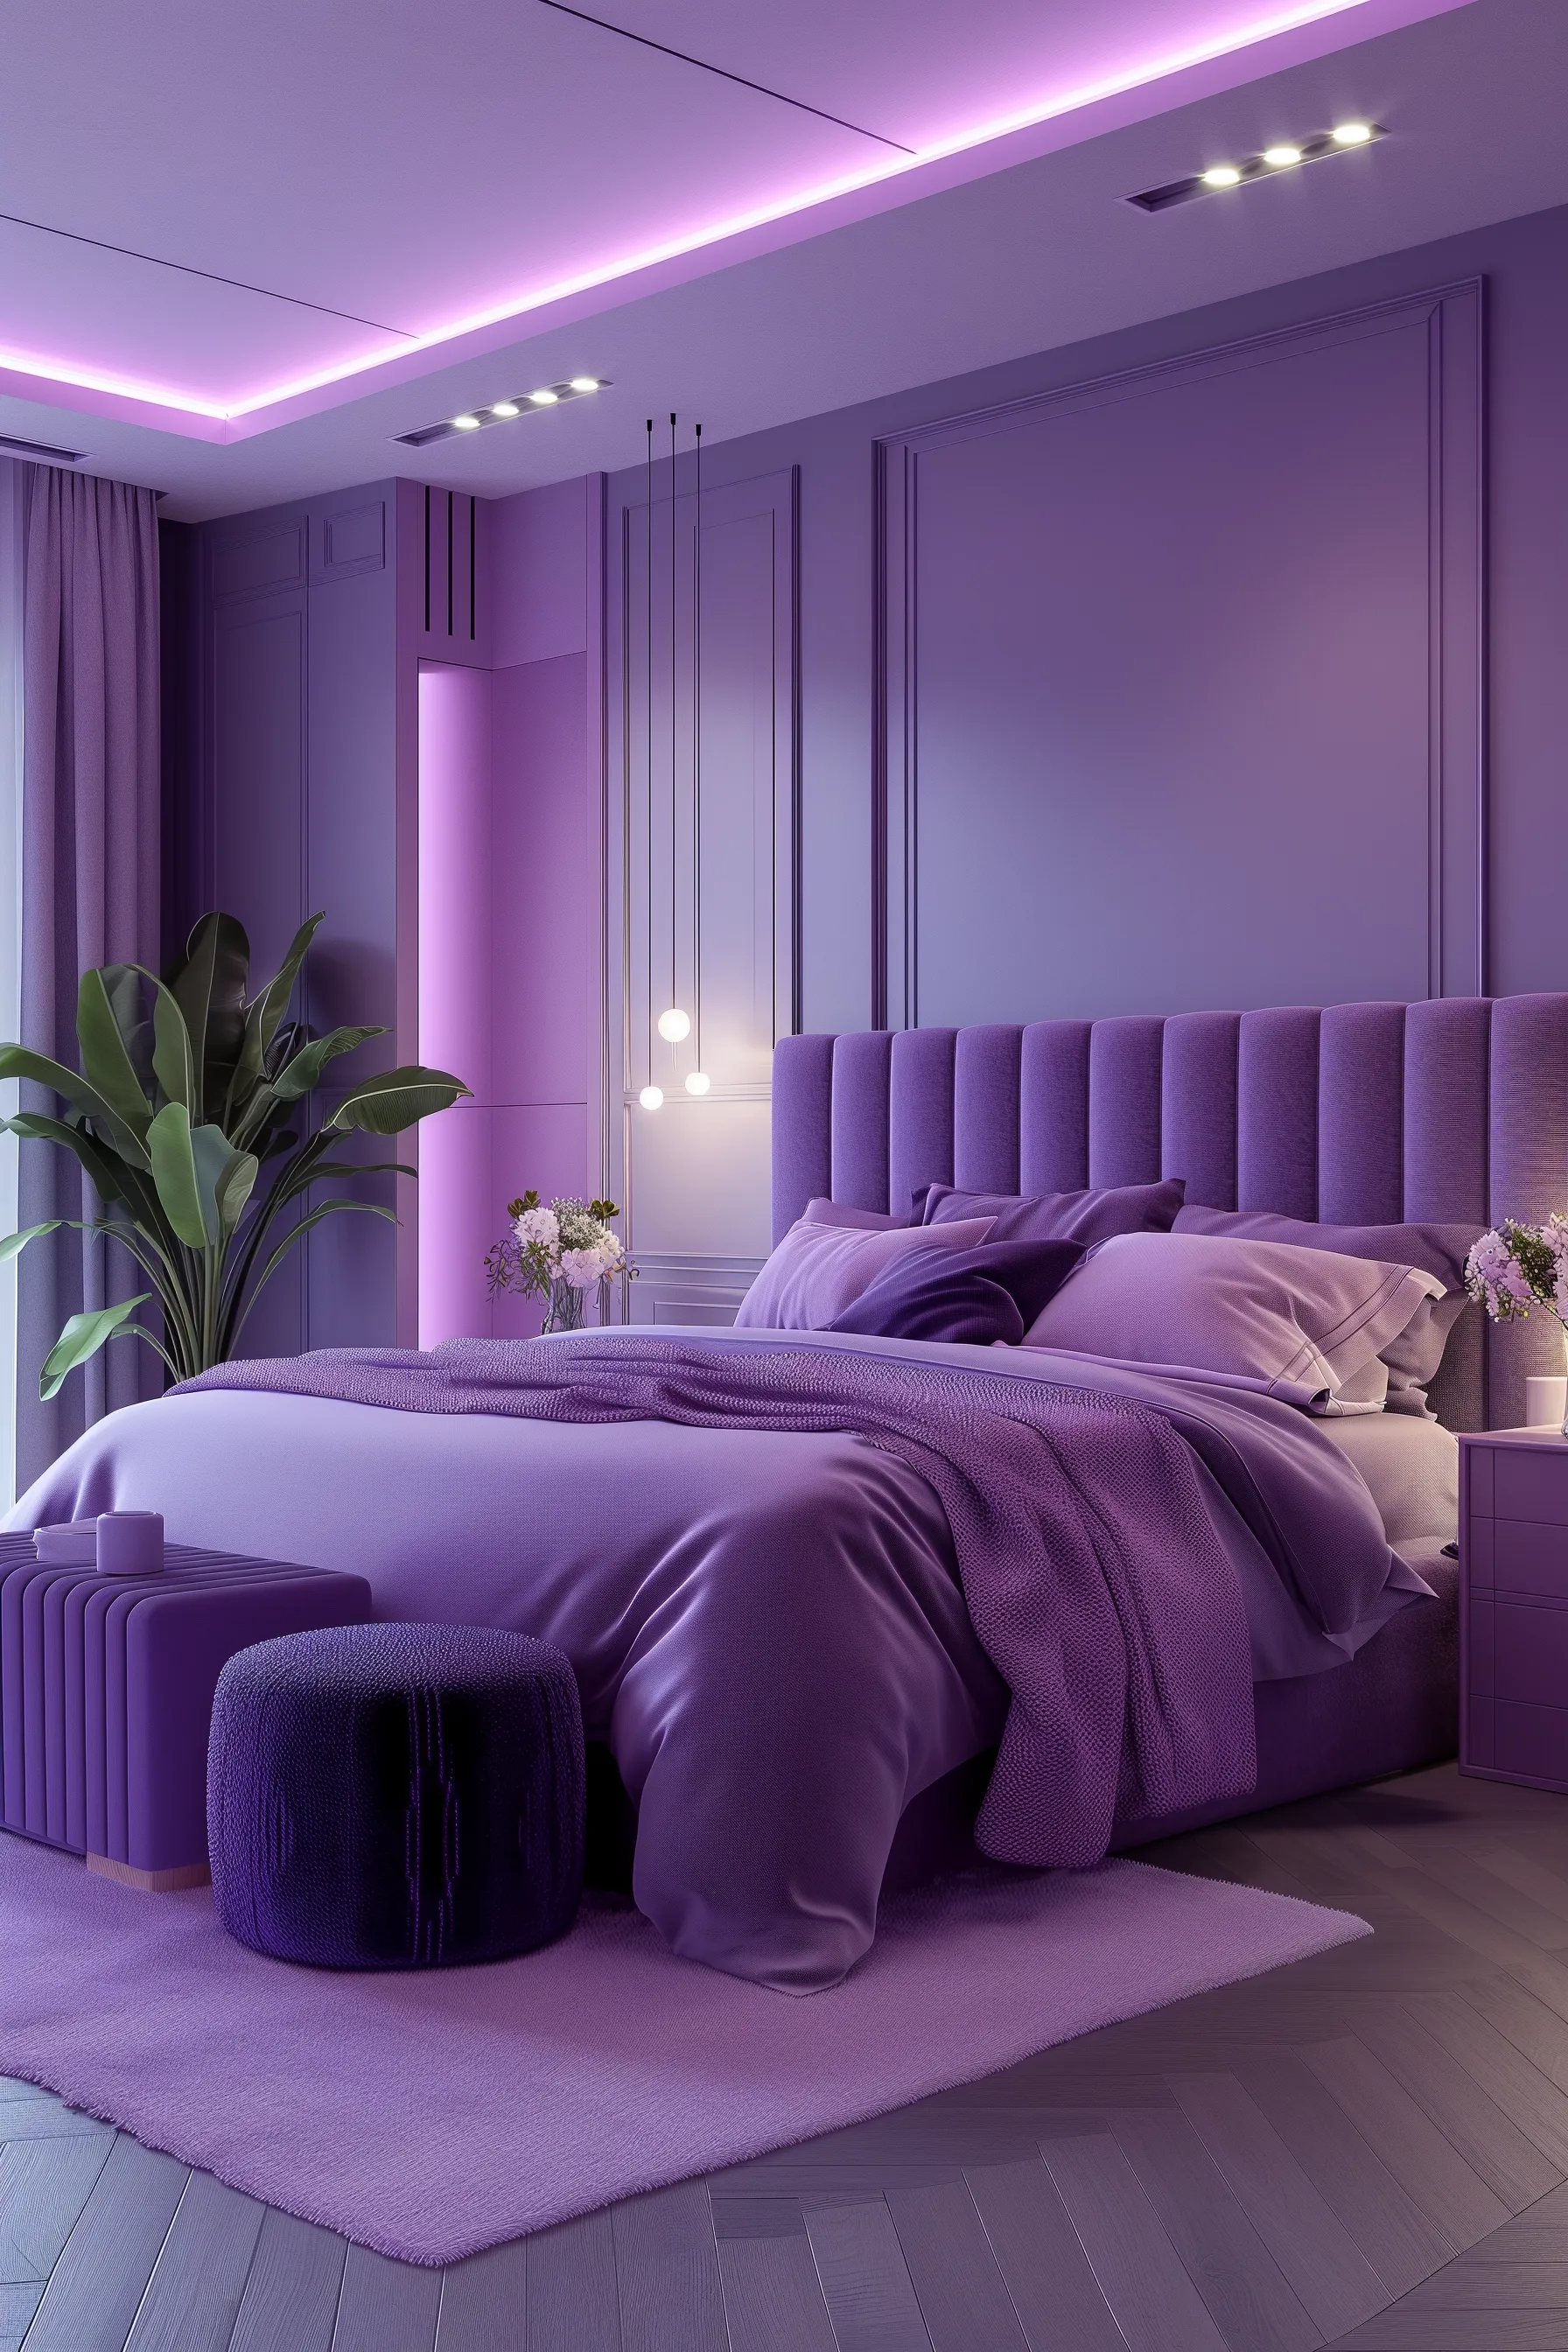 A purple bed with a purple headboard